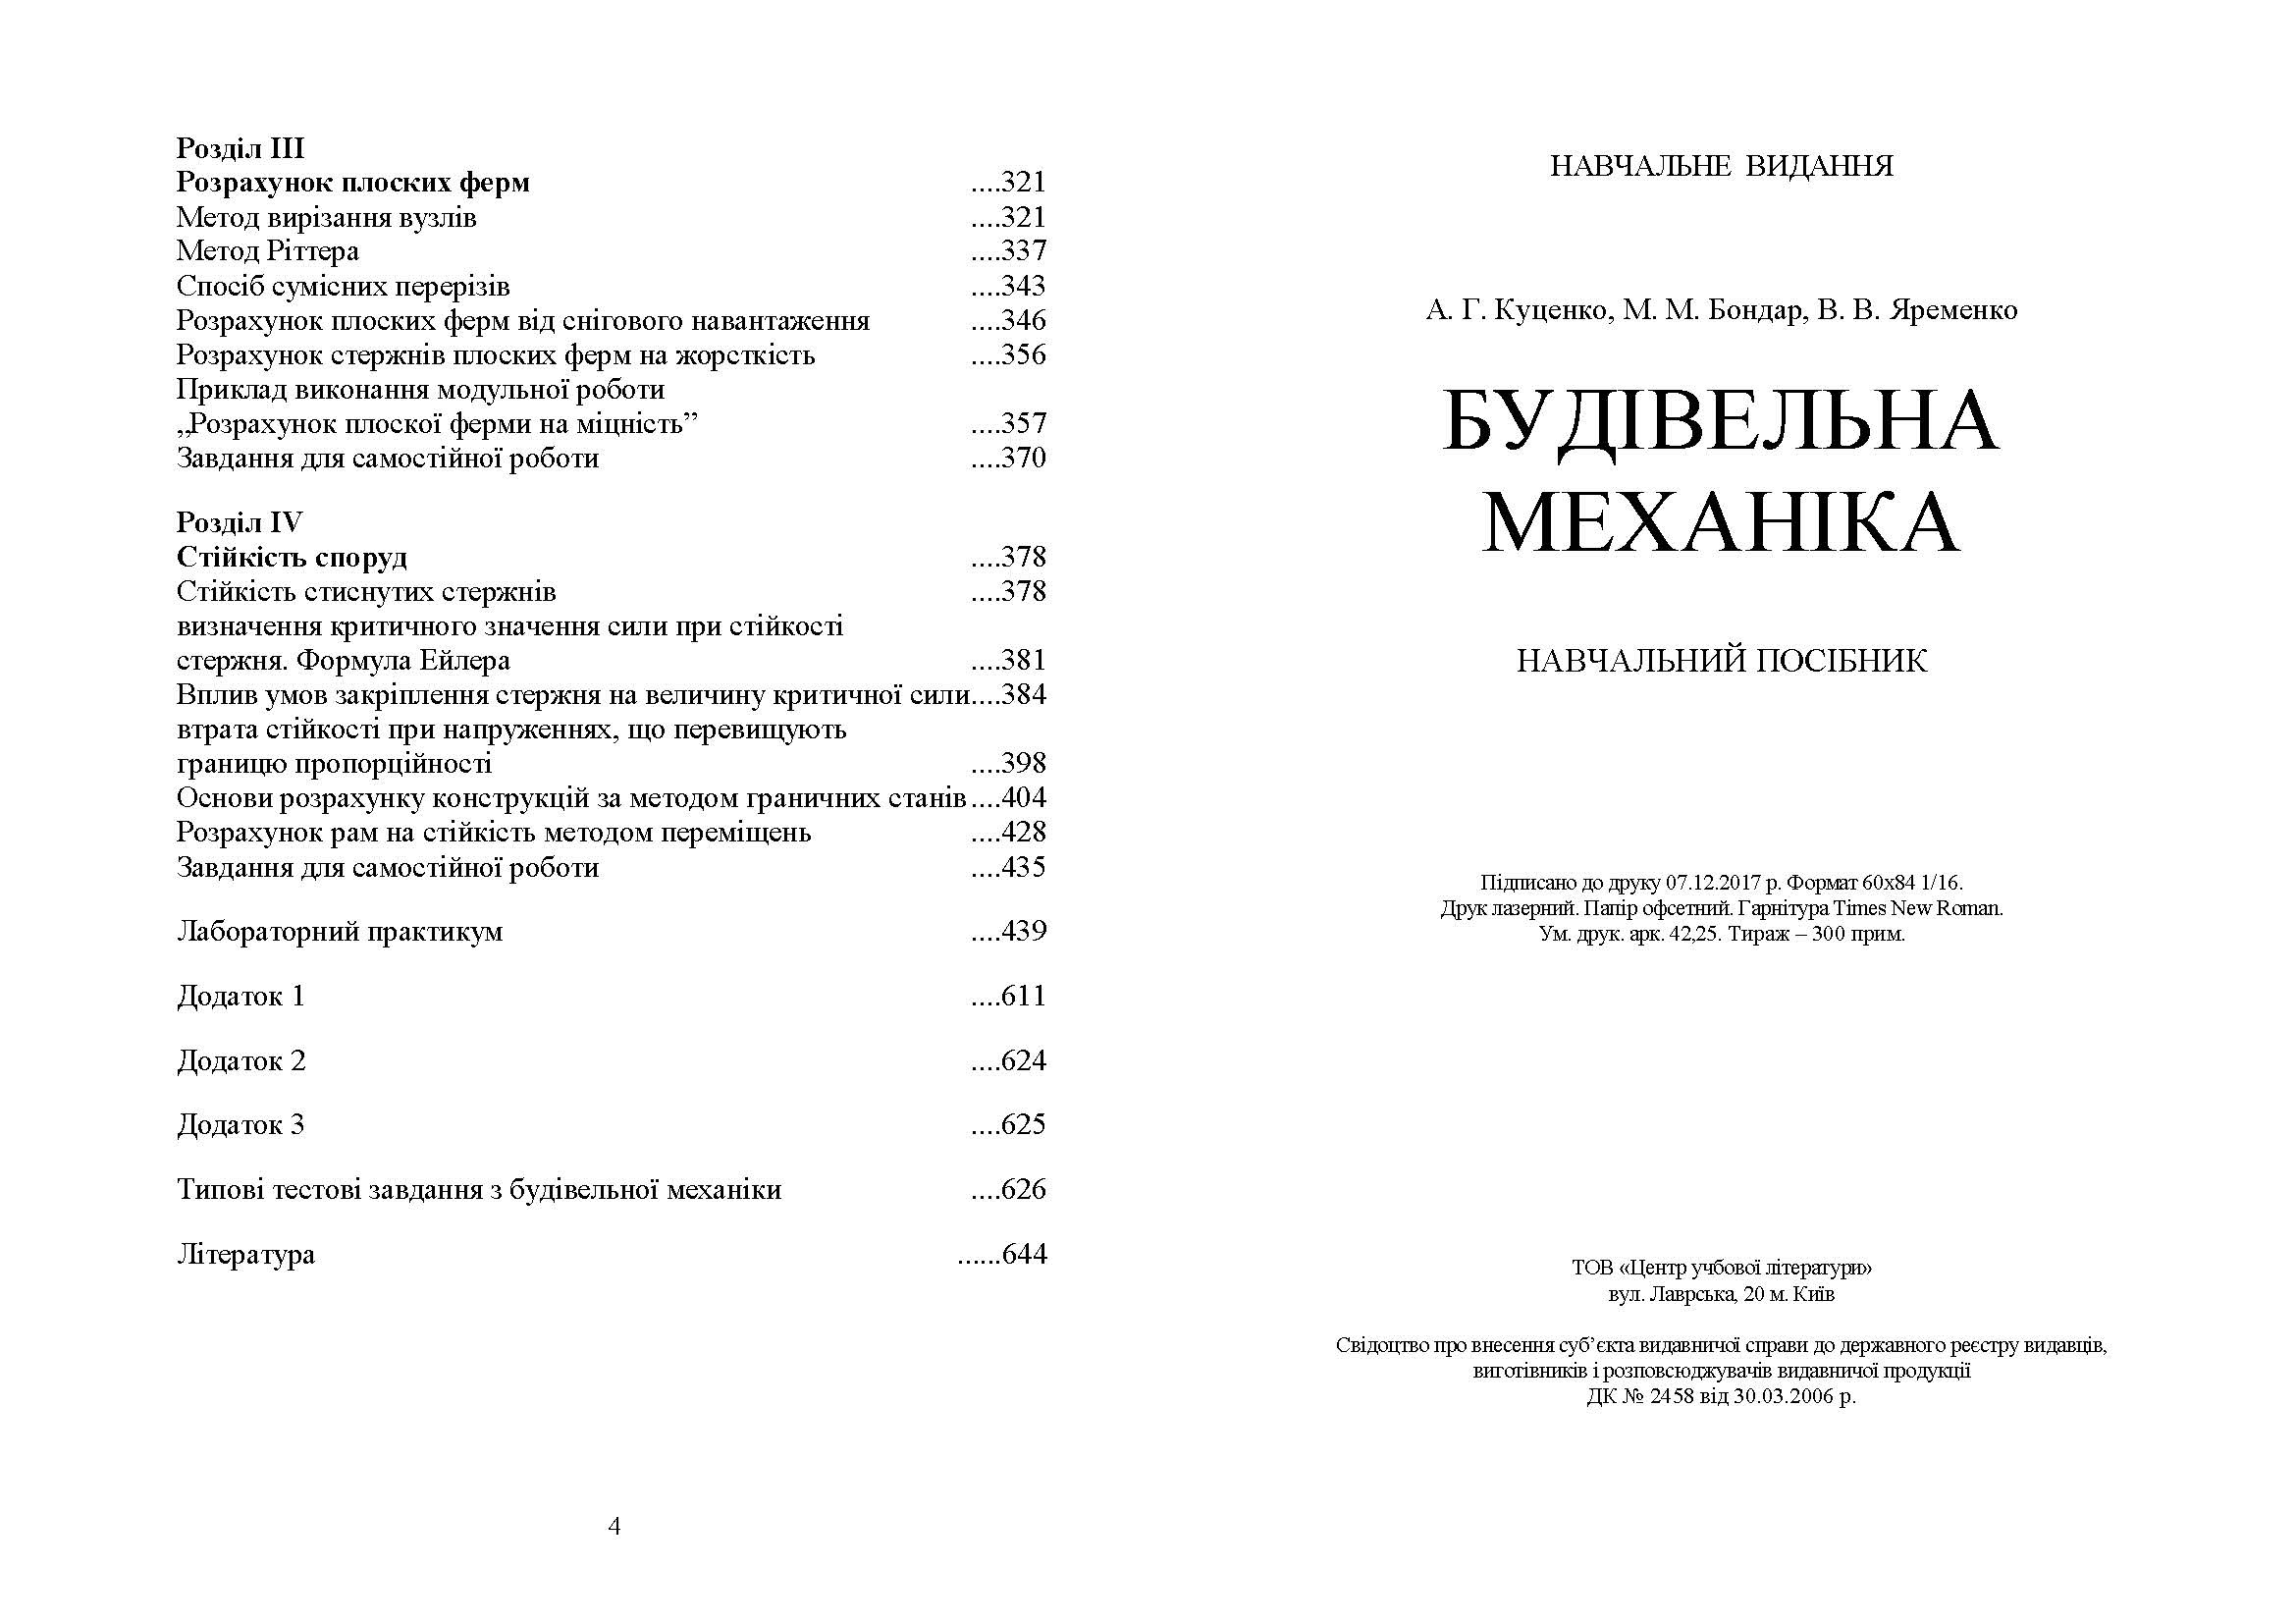 Будівельна механіка. Автор — Куценко А. Г., Бондар М. М., Яременко. 